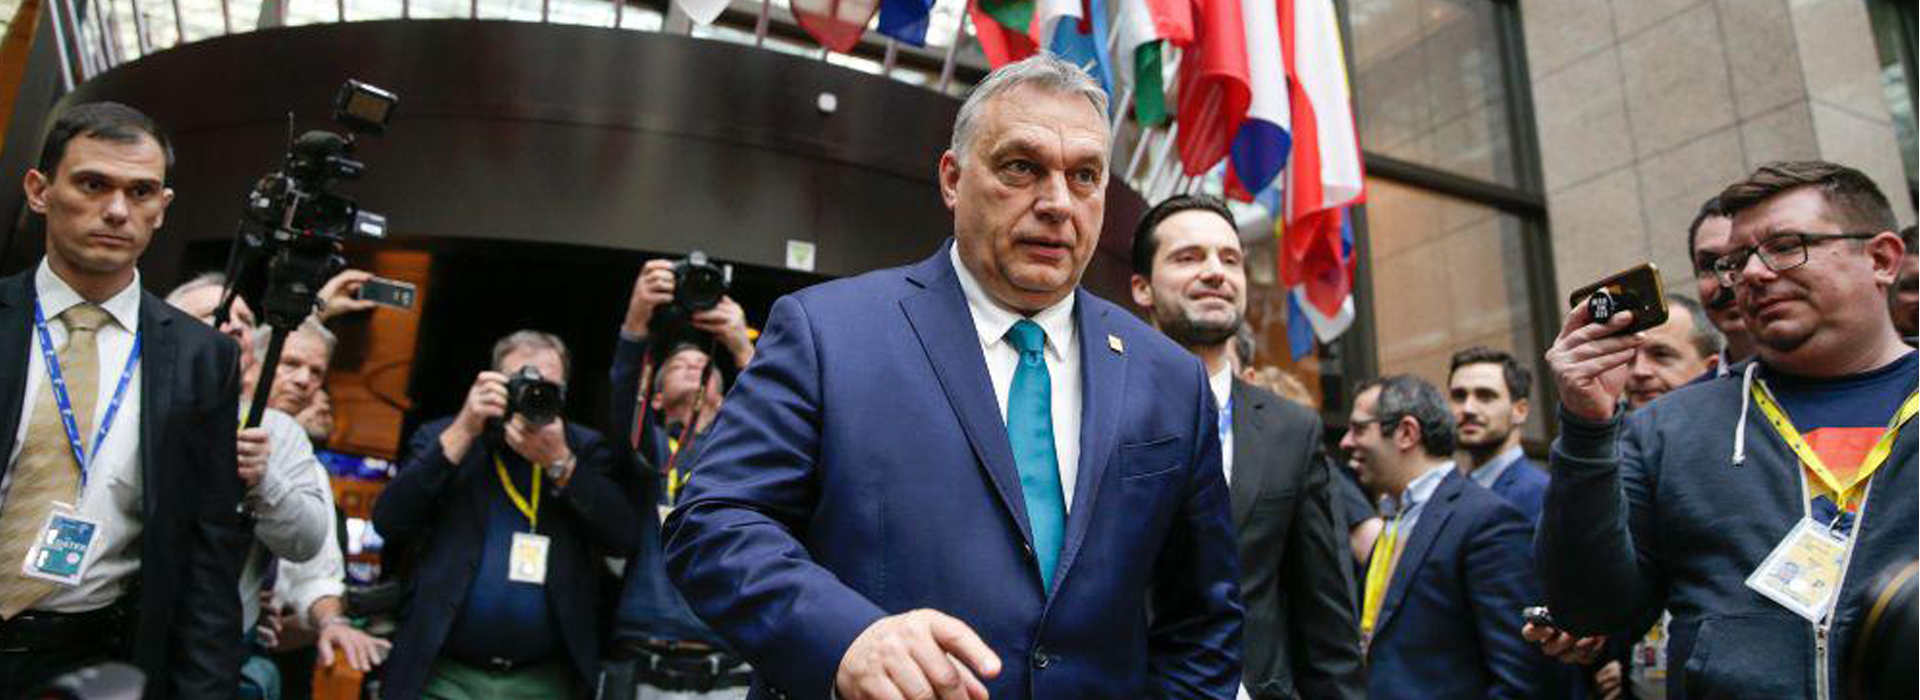 Hungary Becomes Latest EU State to Consider National Social Media Regulation